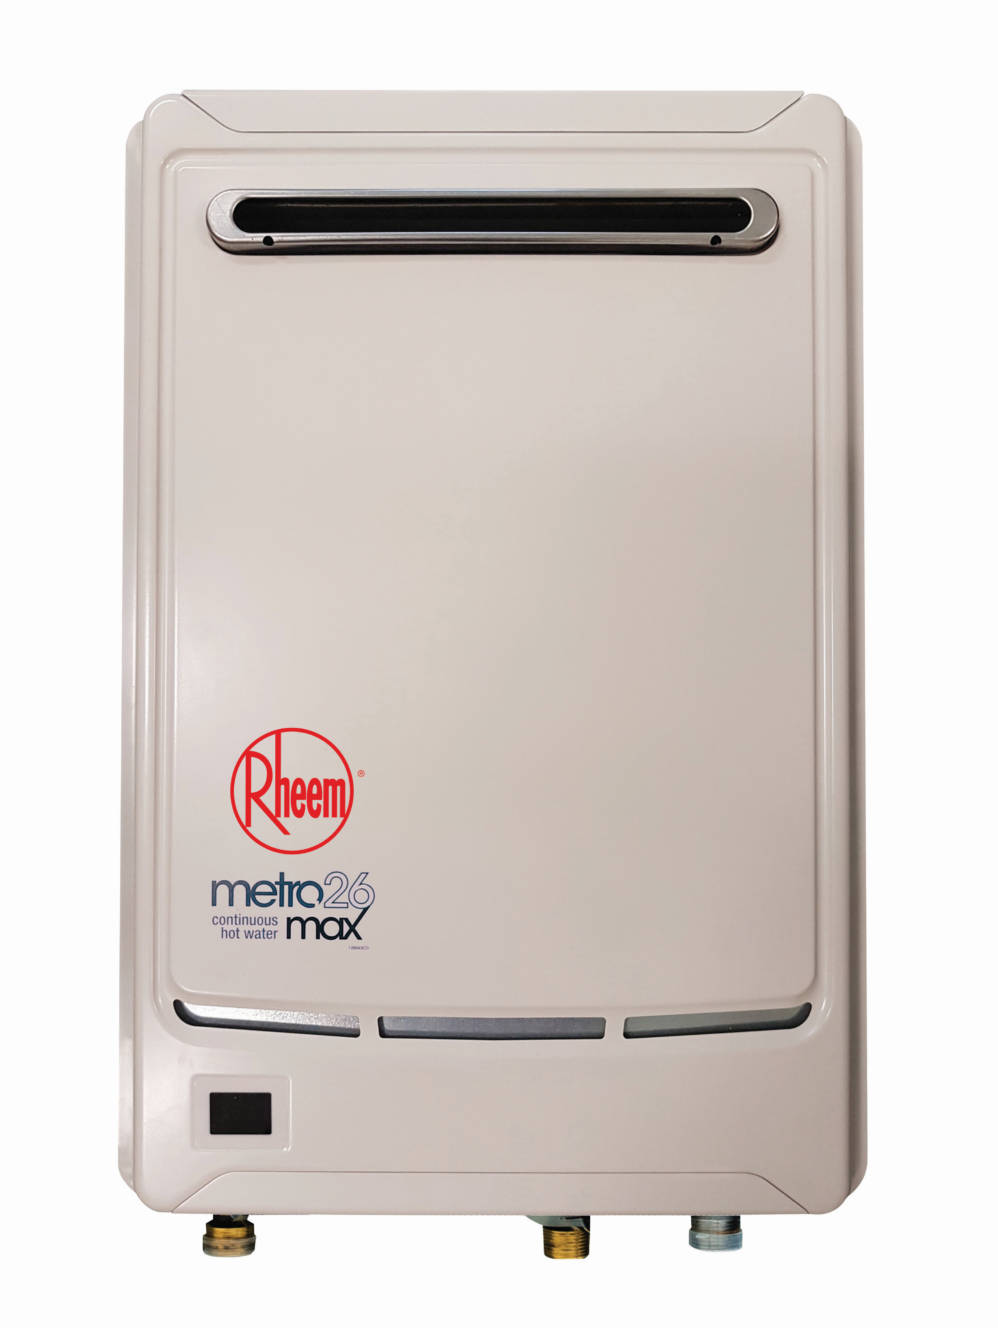 Rheem Metro Max Hot Water Heater